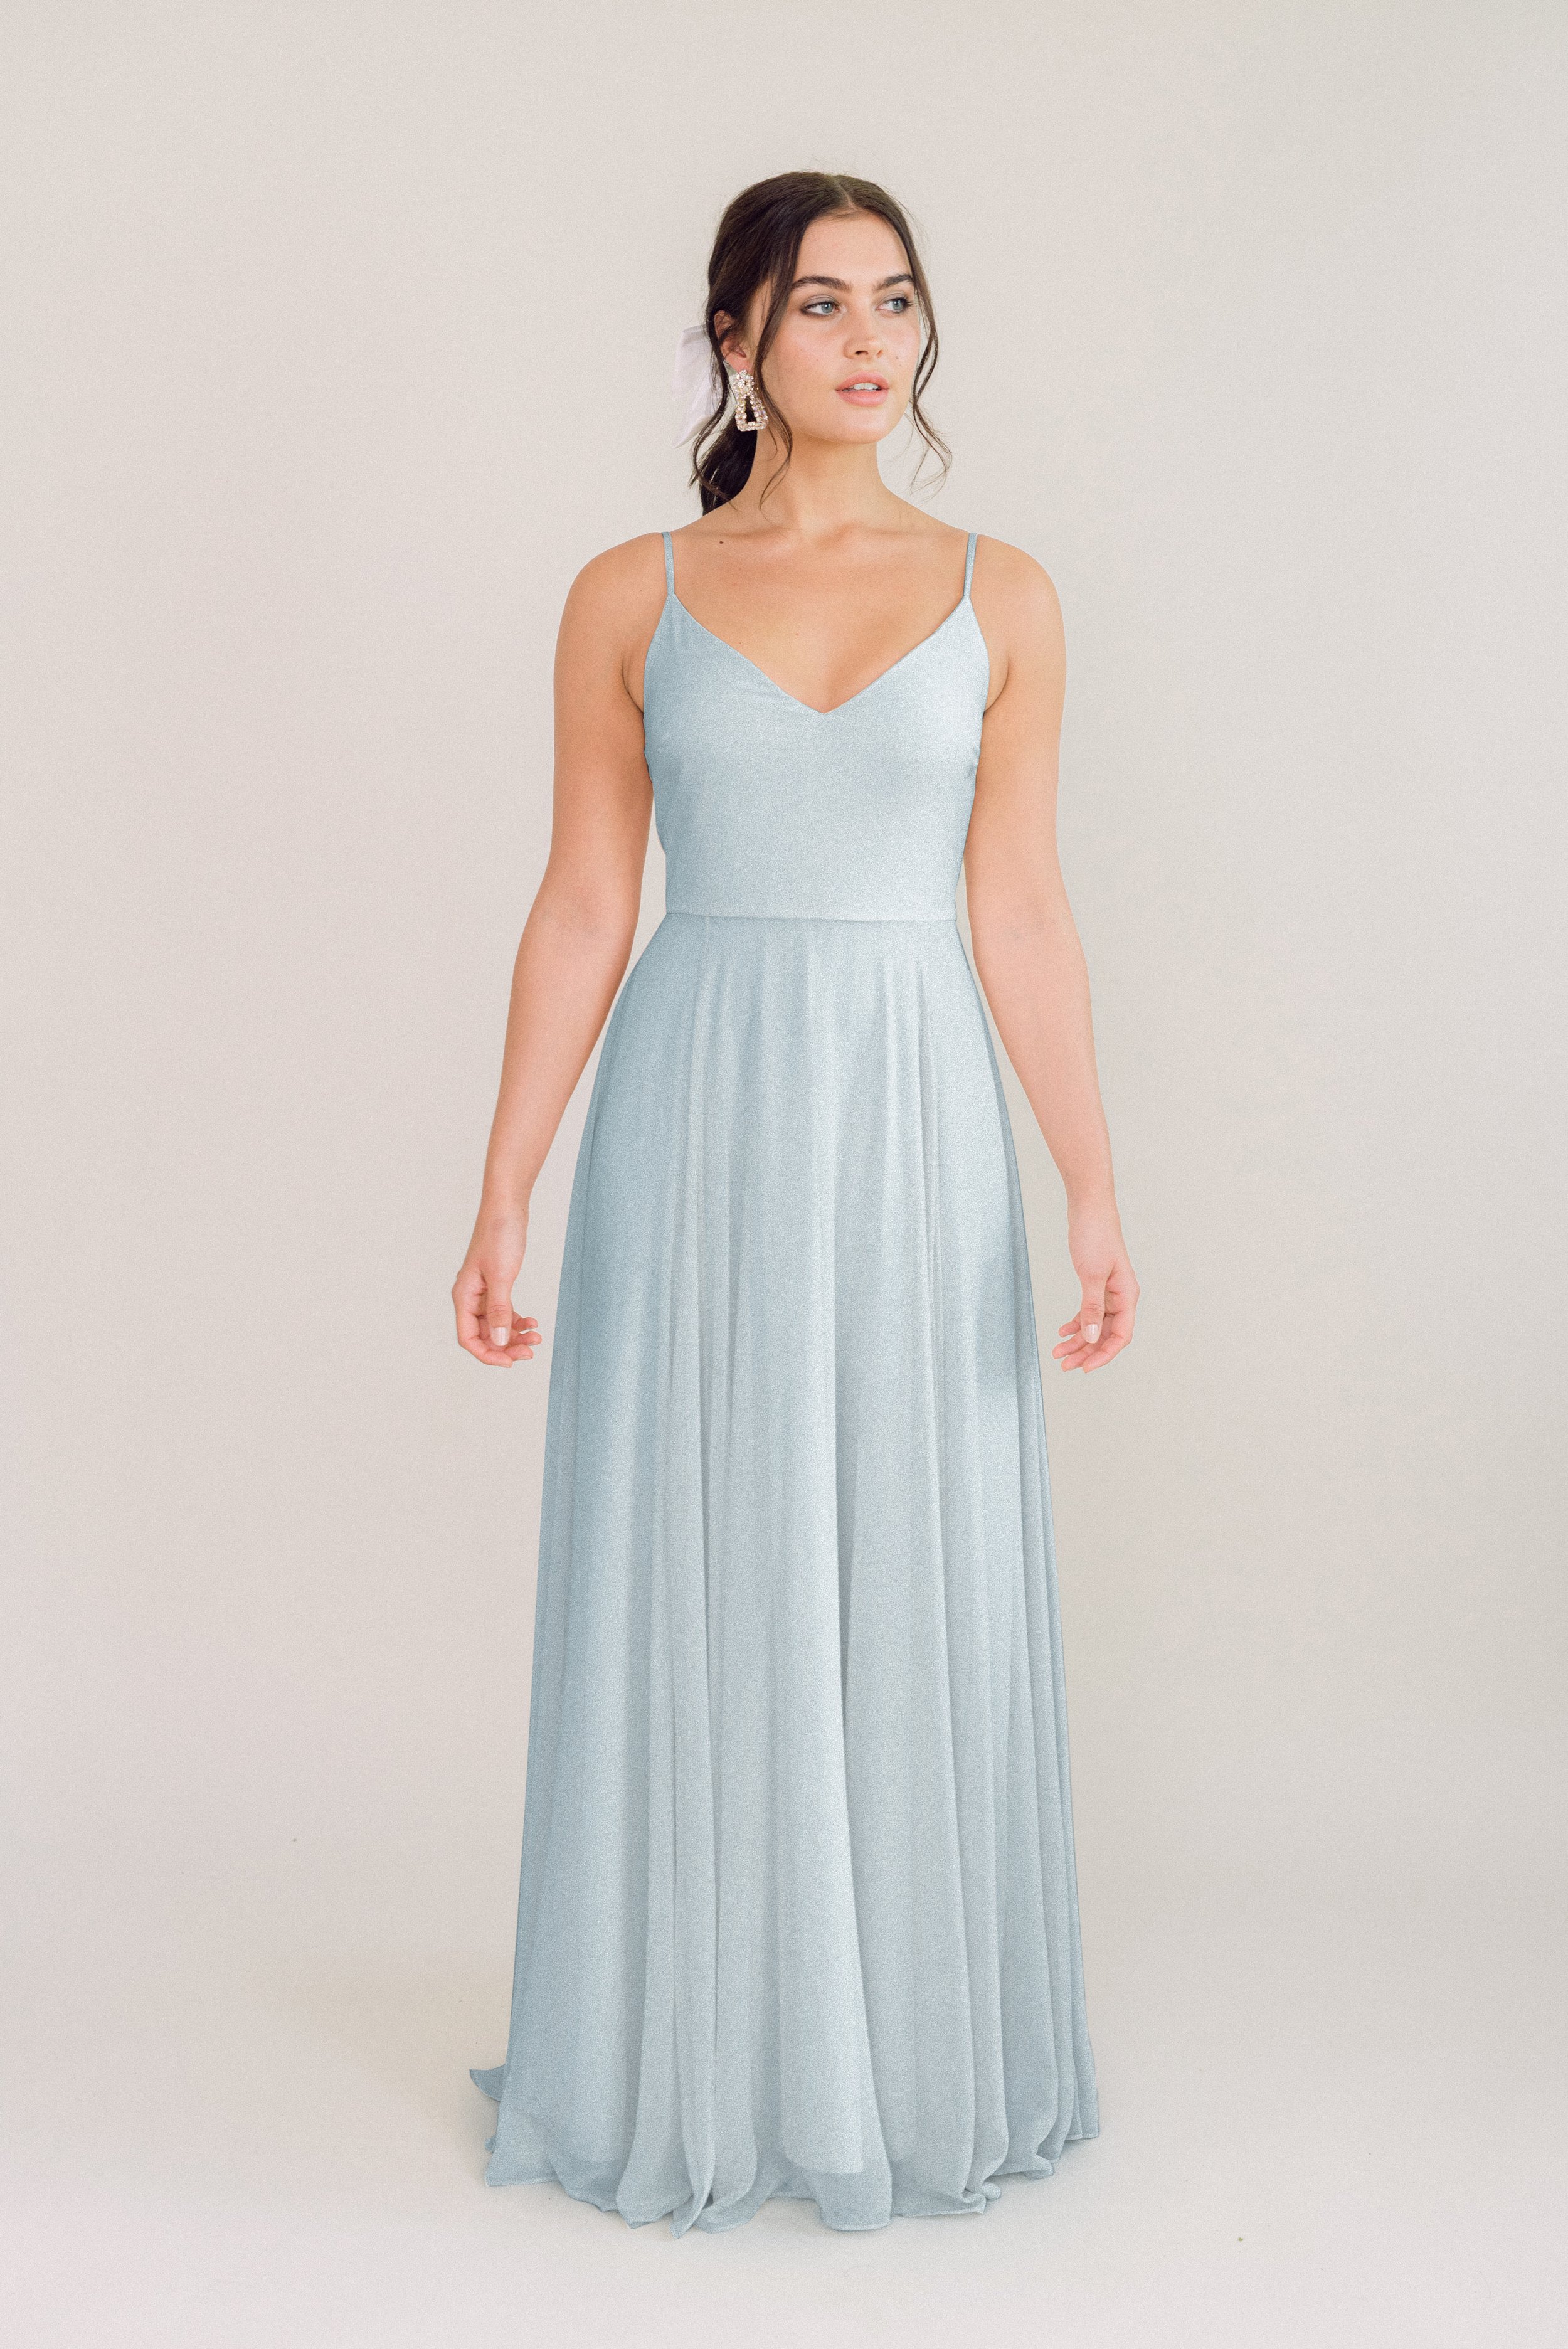 TH&TH Edie Bridesmaid Dress in Powder Blue — TH&TH